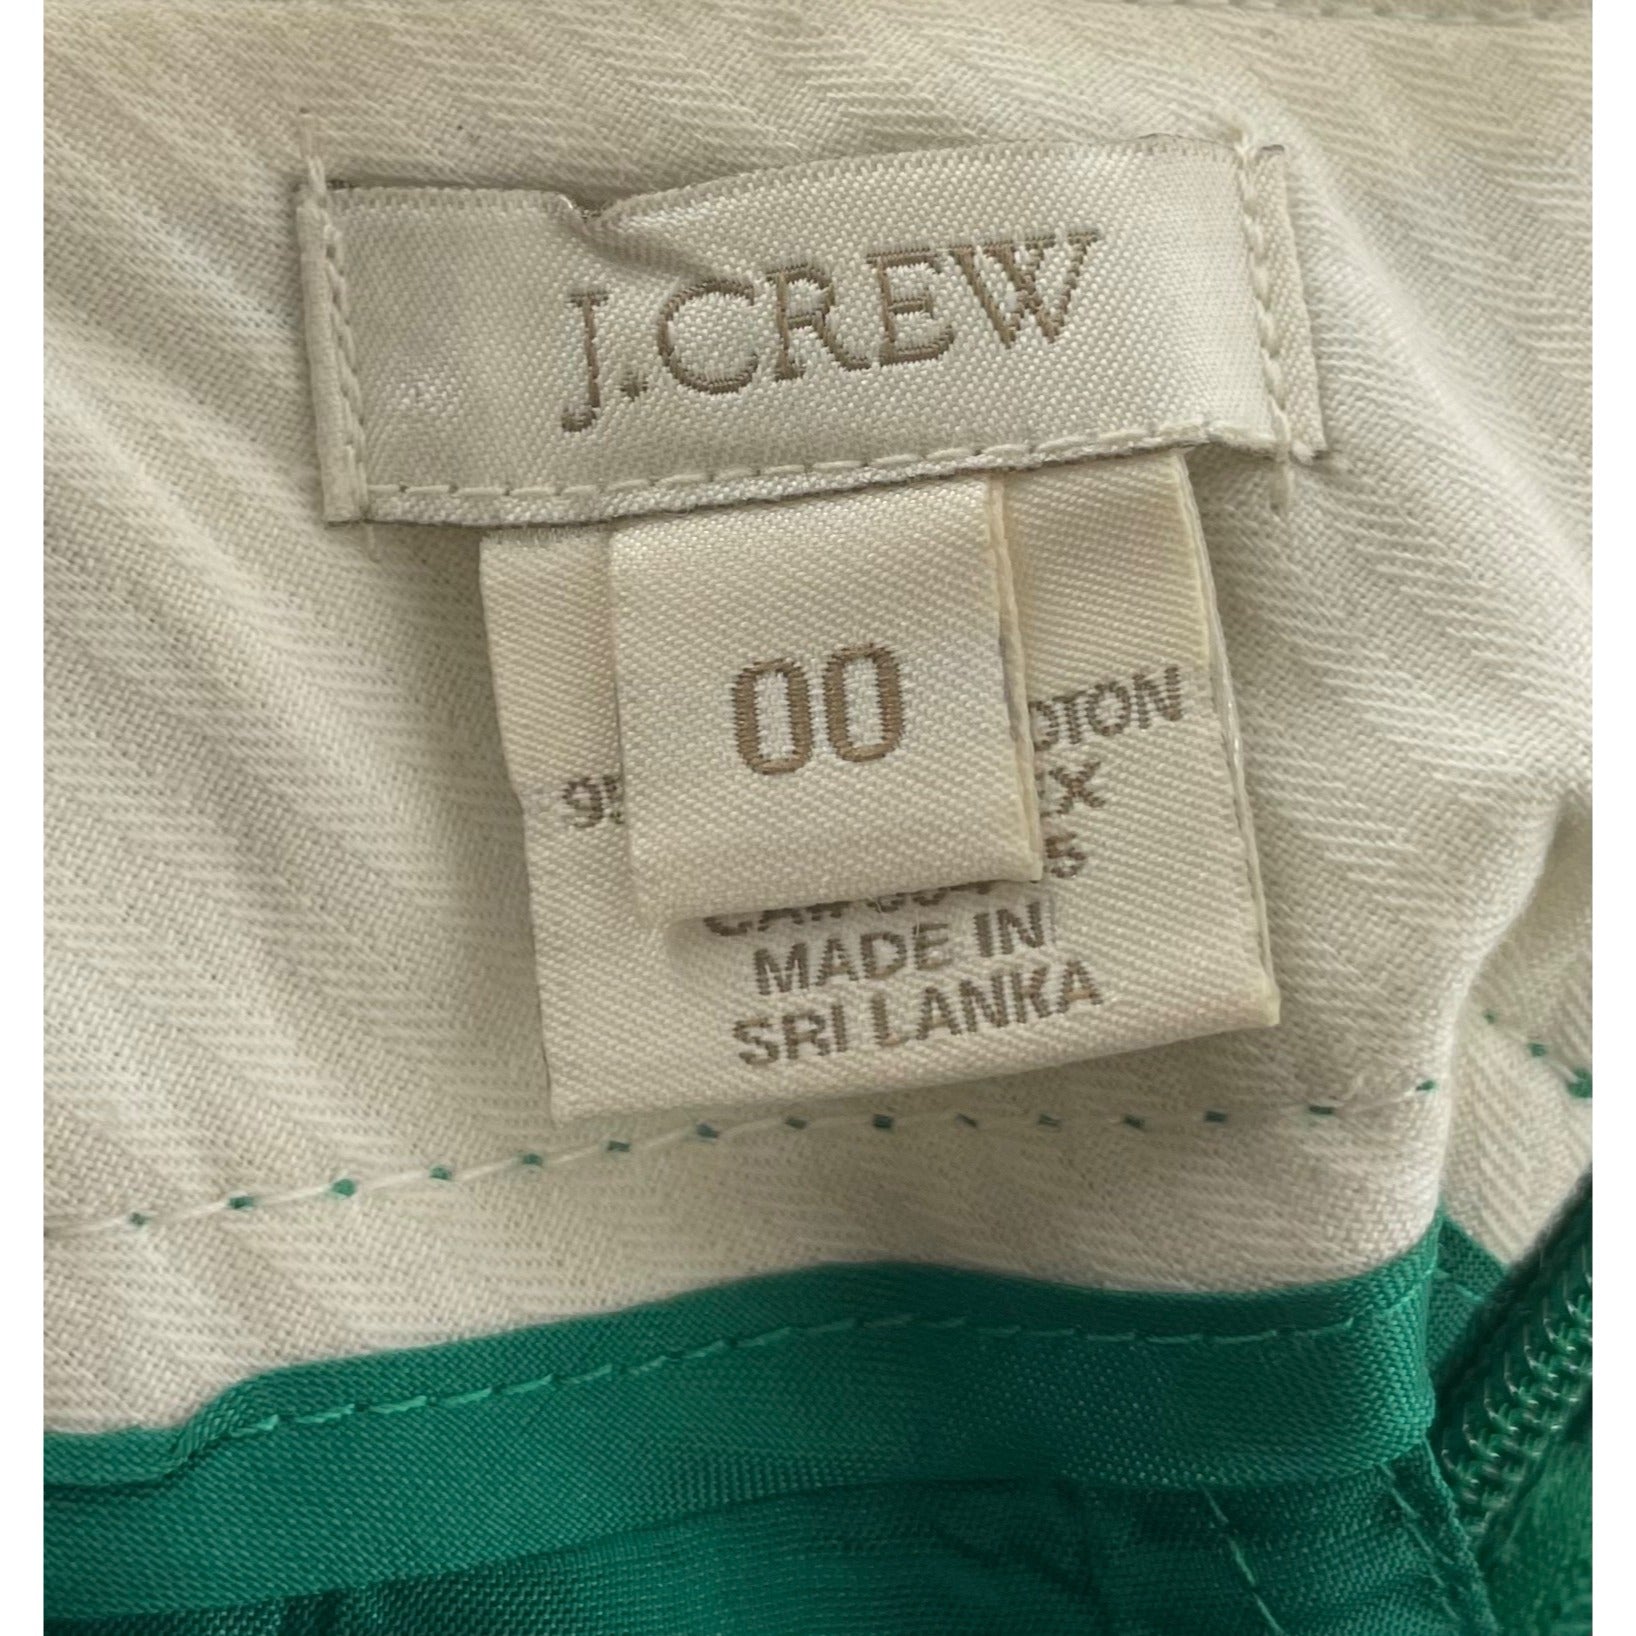 J. Crew Women's Size 00 Green No. 2 Pencil Skirt